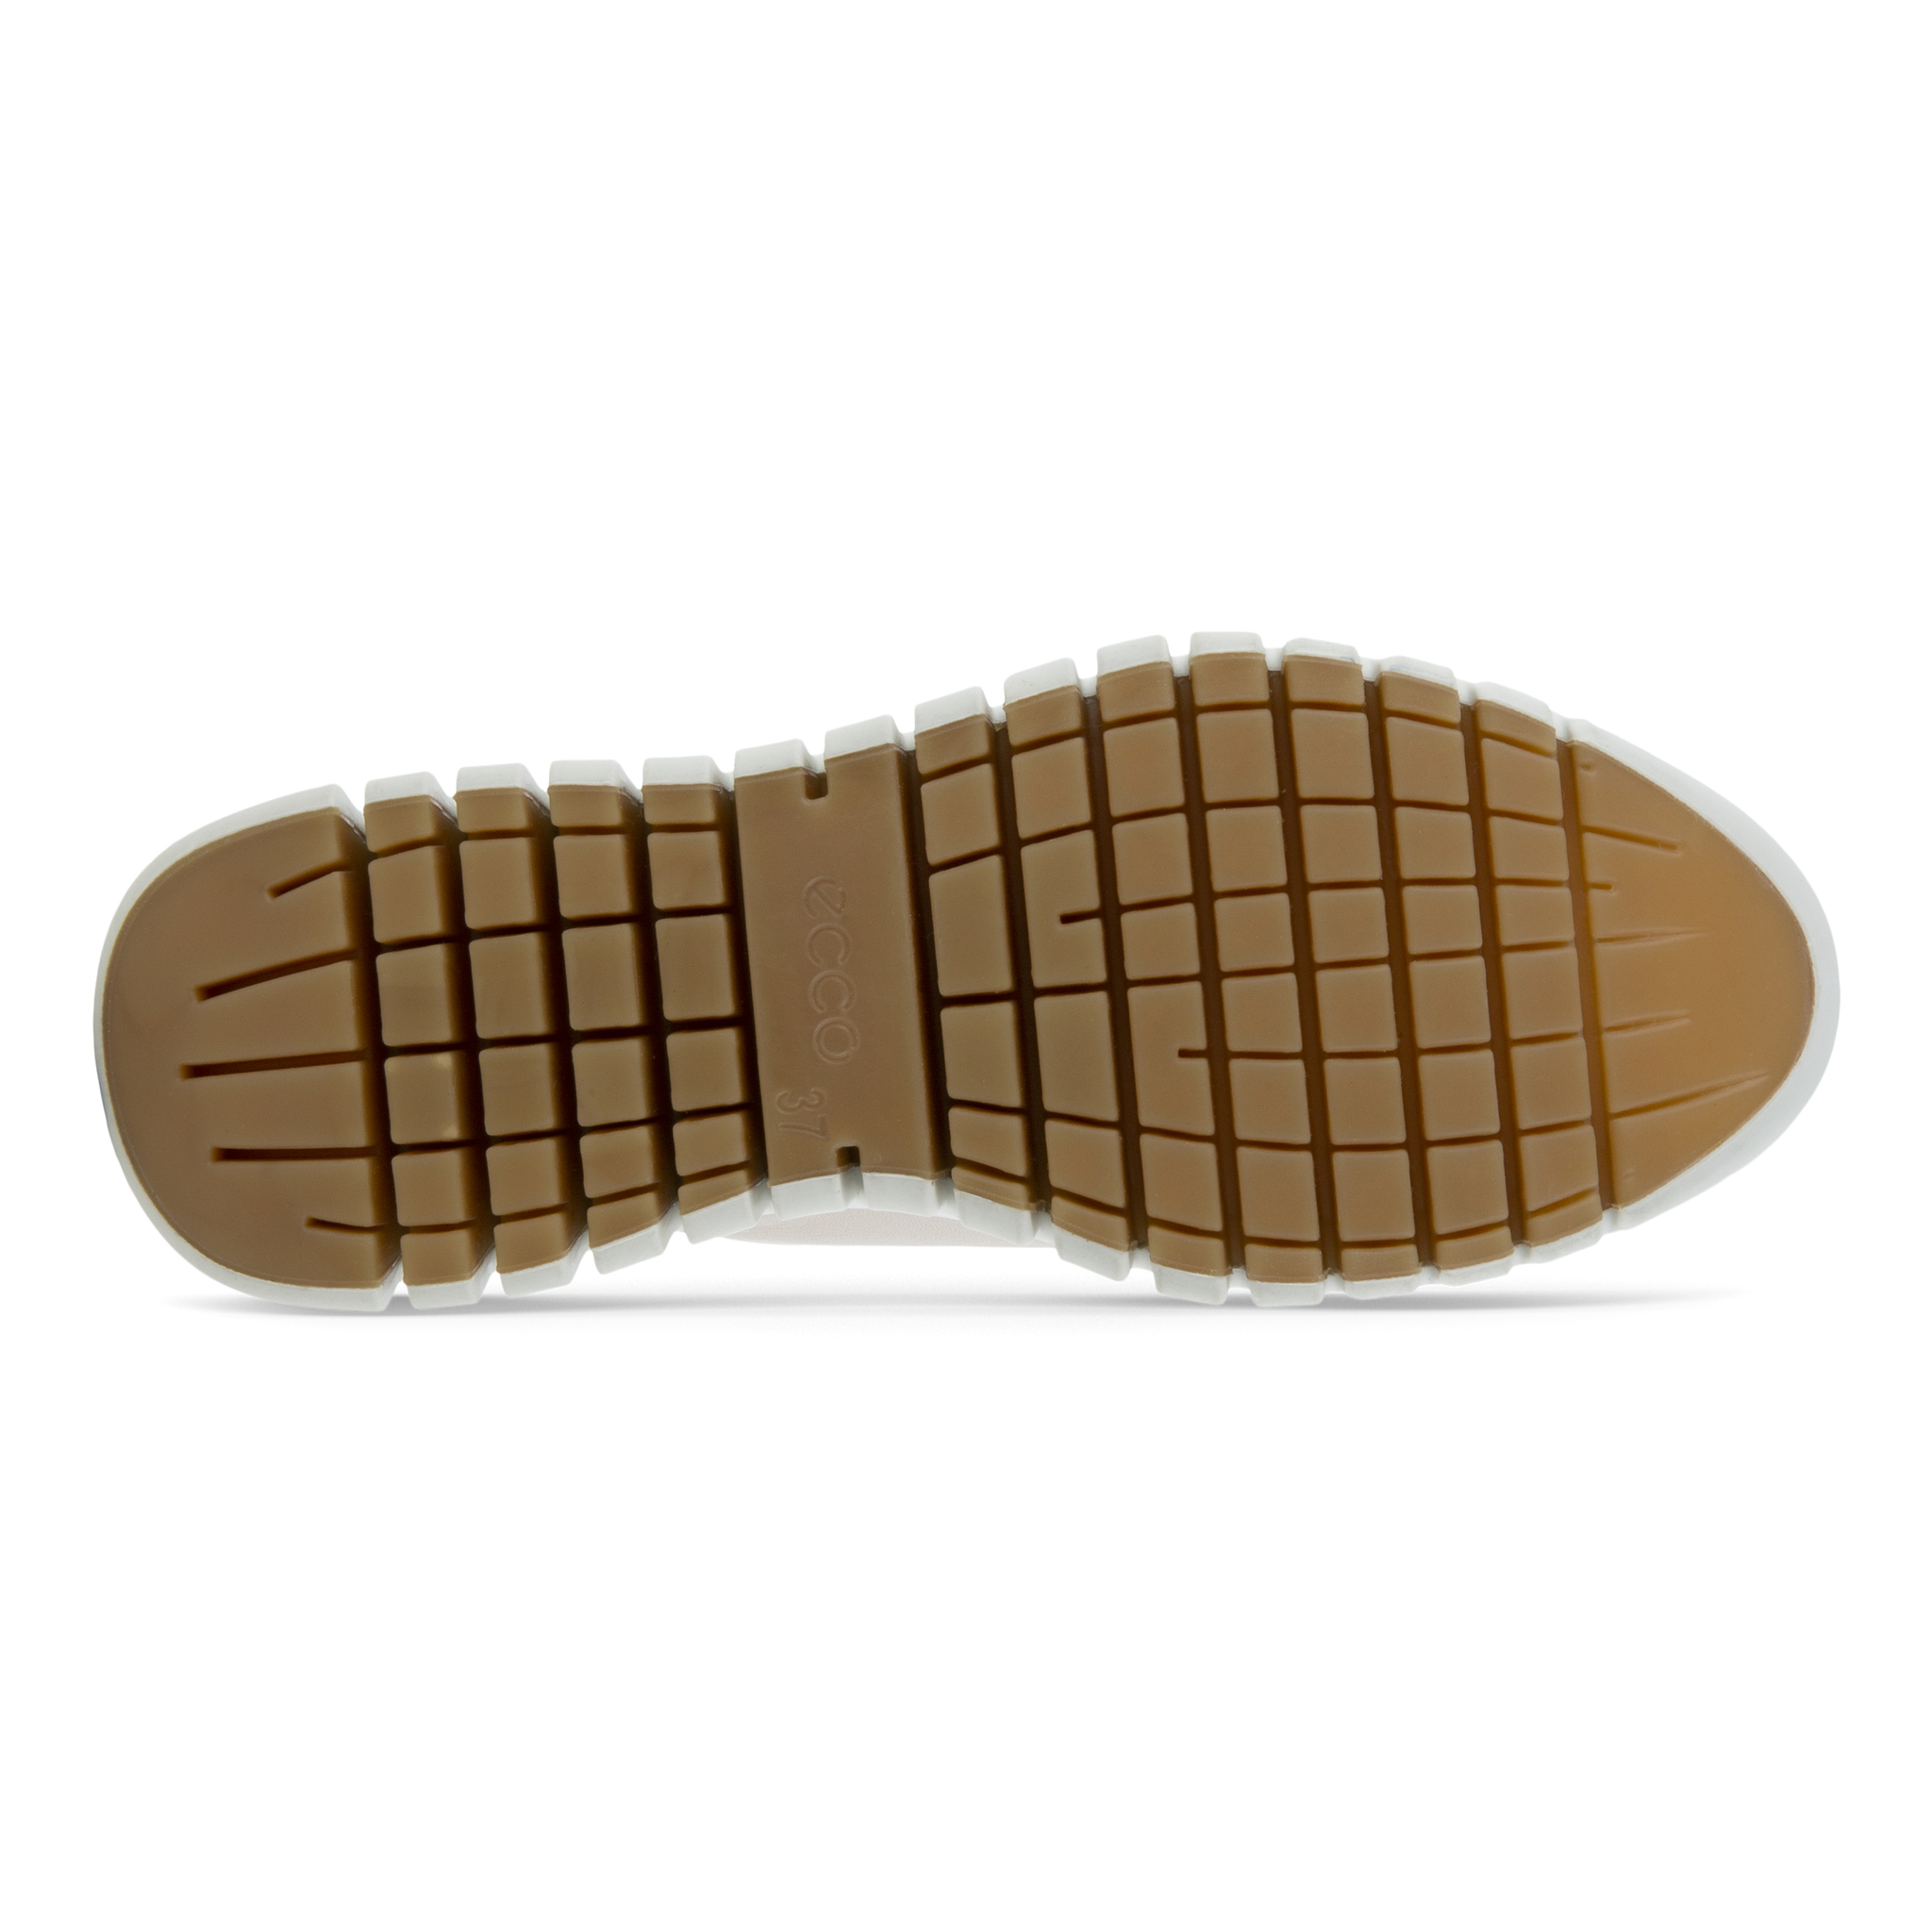 ECCO Gruuv (218203) - Ladies Walking Shoe in Limestone (Cream) with Gore-Tex | ECCO Shoes |Wisemans | Bantry | Shoe Shop | West Cork | Ireland